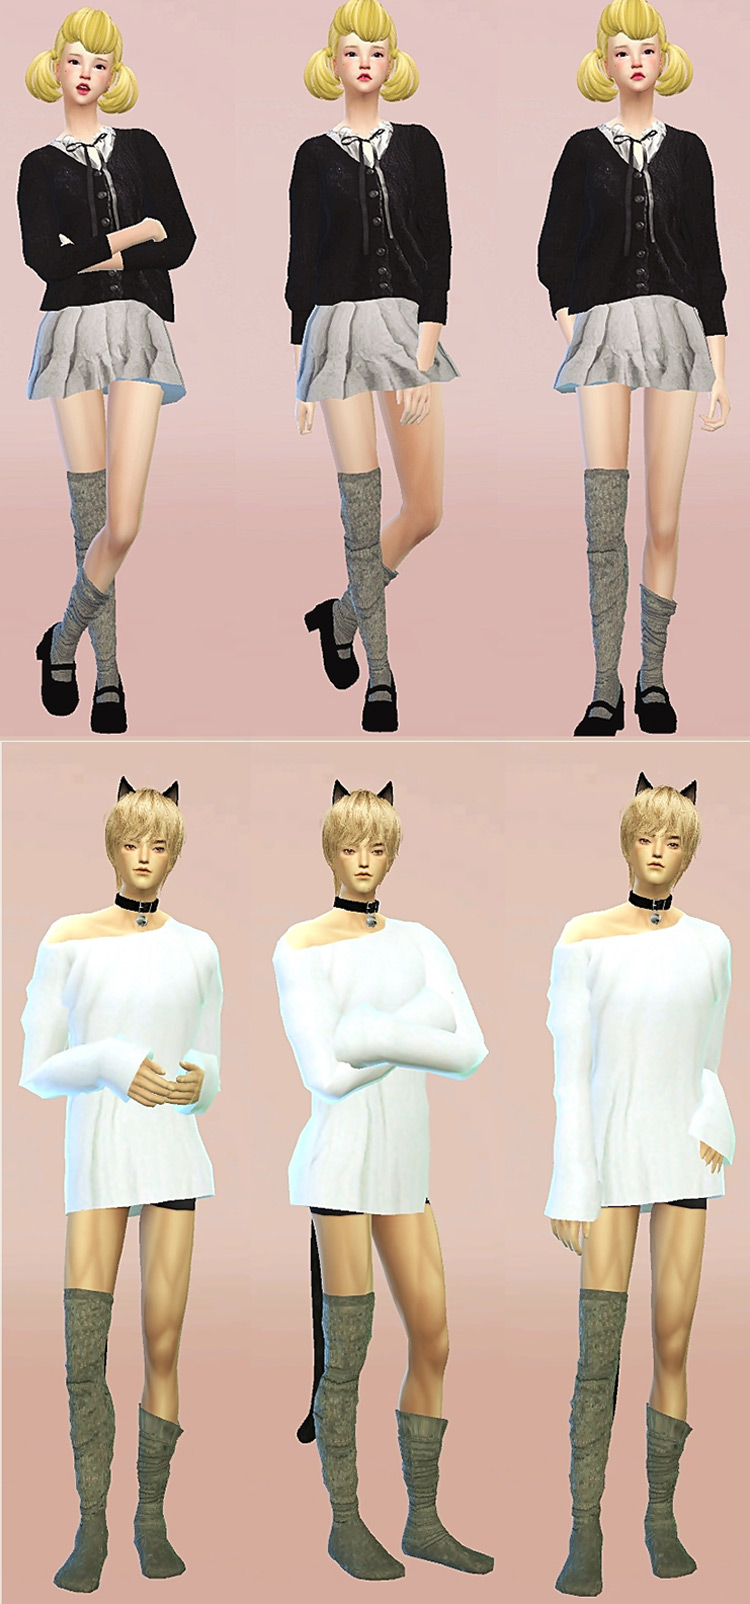 Female Loose Socks + Male Loose Socks by Sims4 Marigold TS4 CC